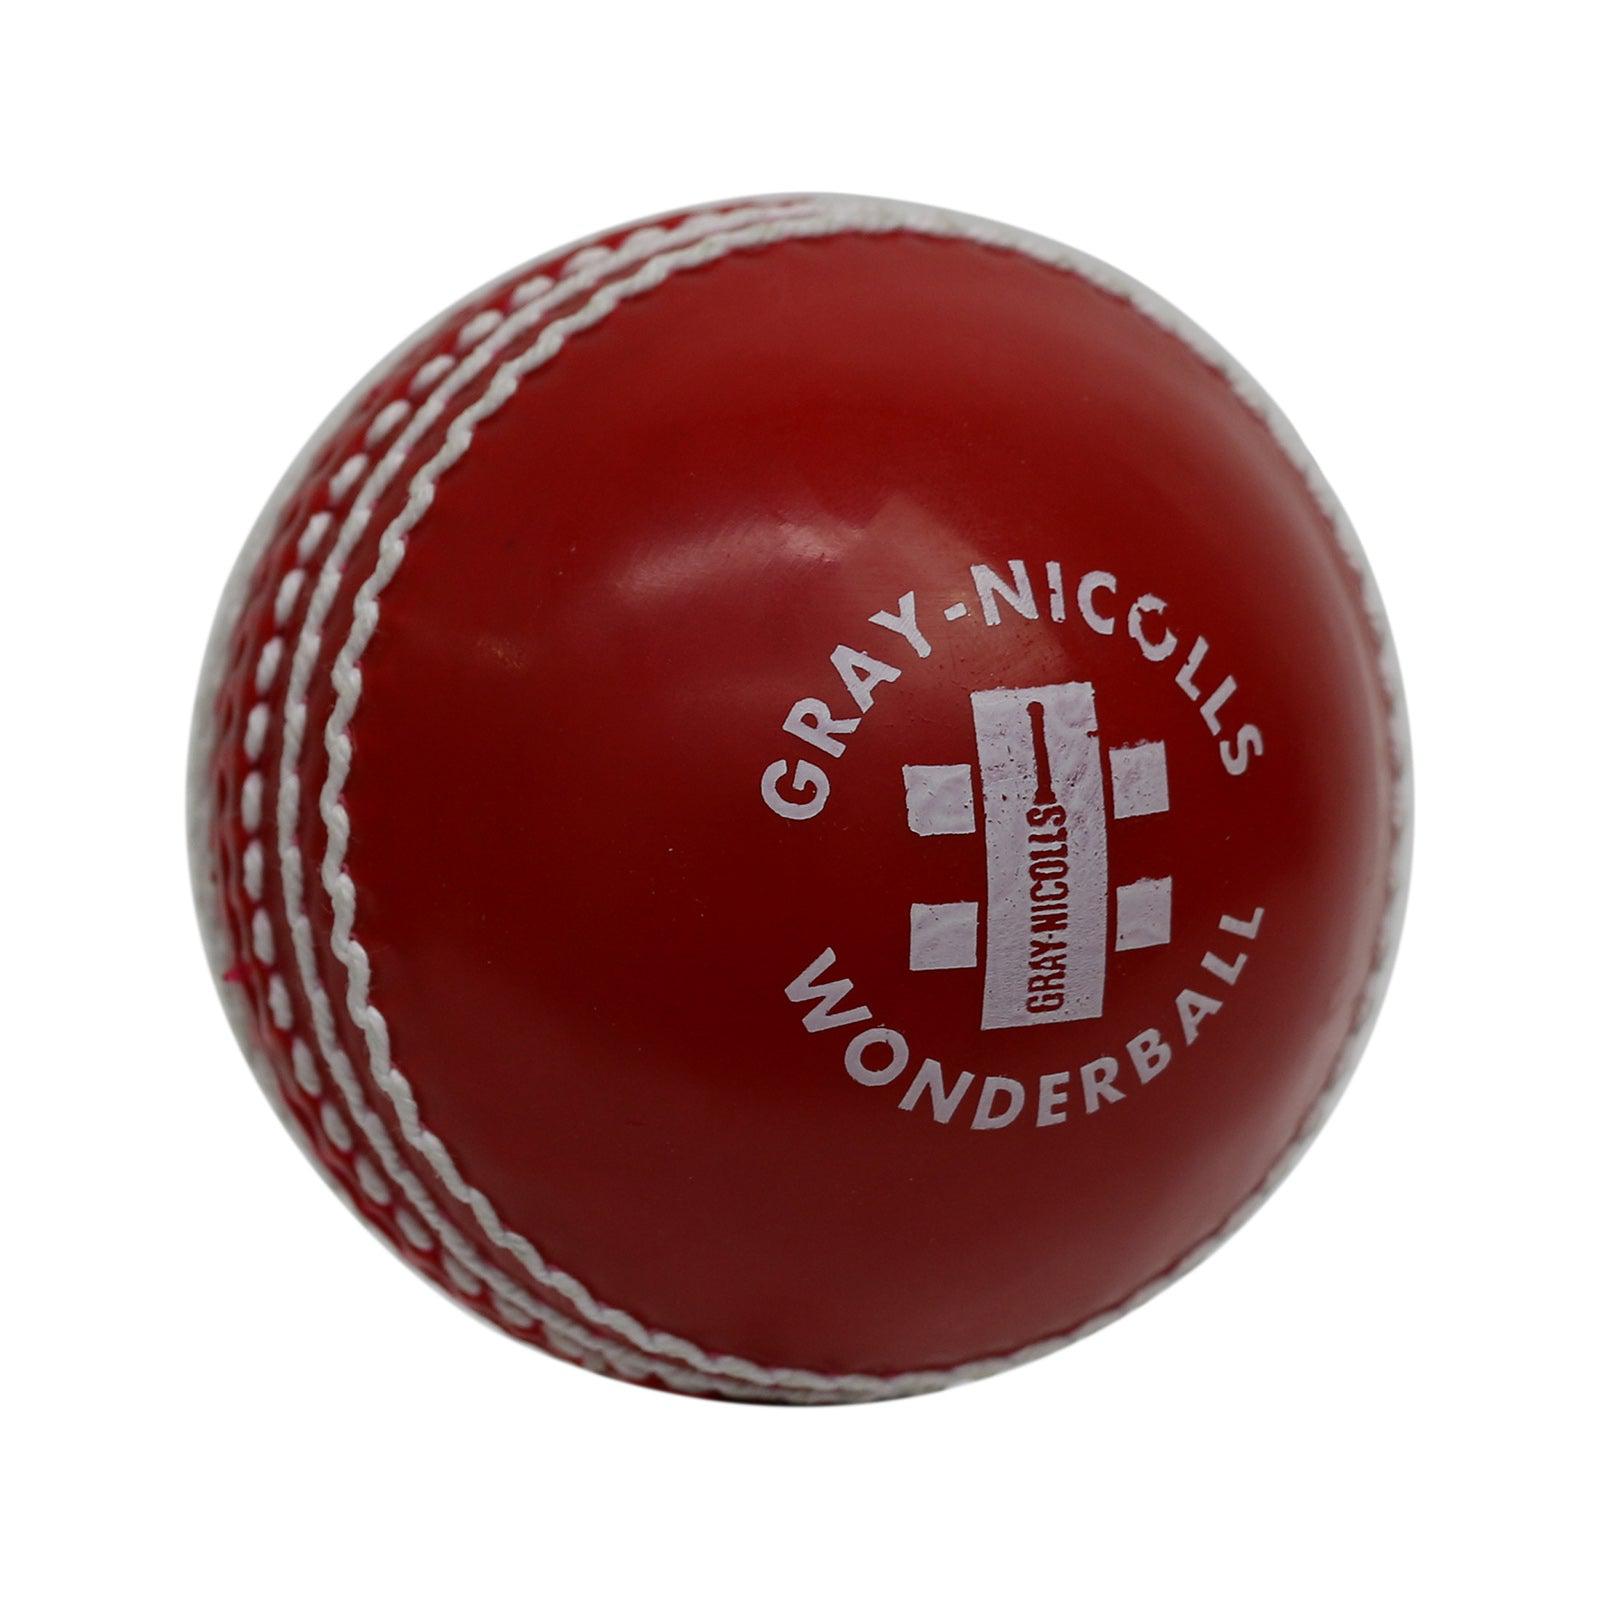 Gray Nicolls Skill Bowling 3 Pack (Swing ball/SpinBall/Wonderball)